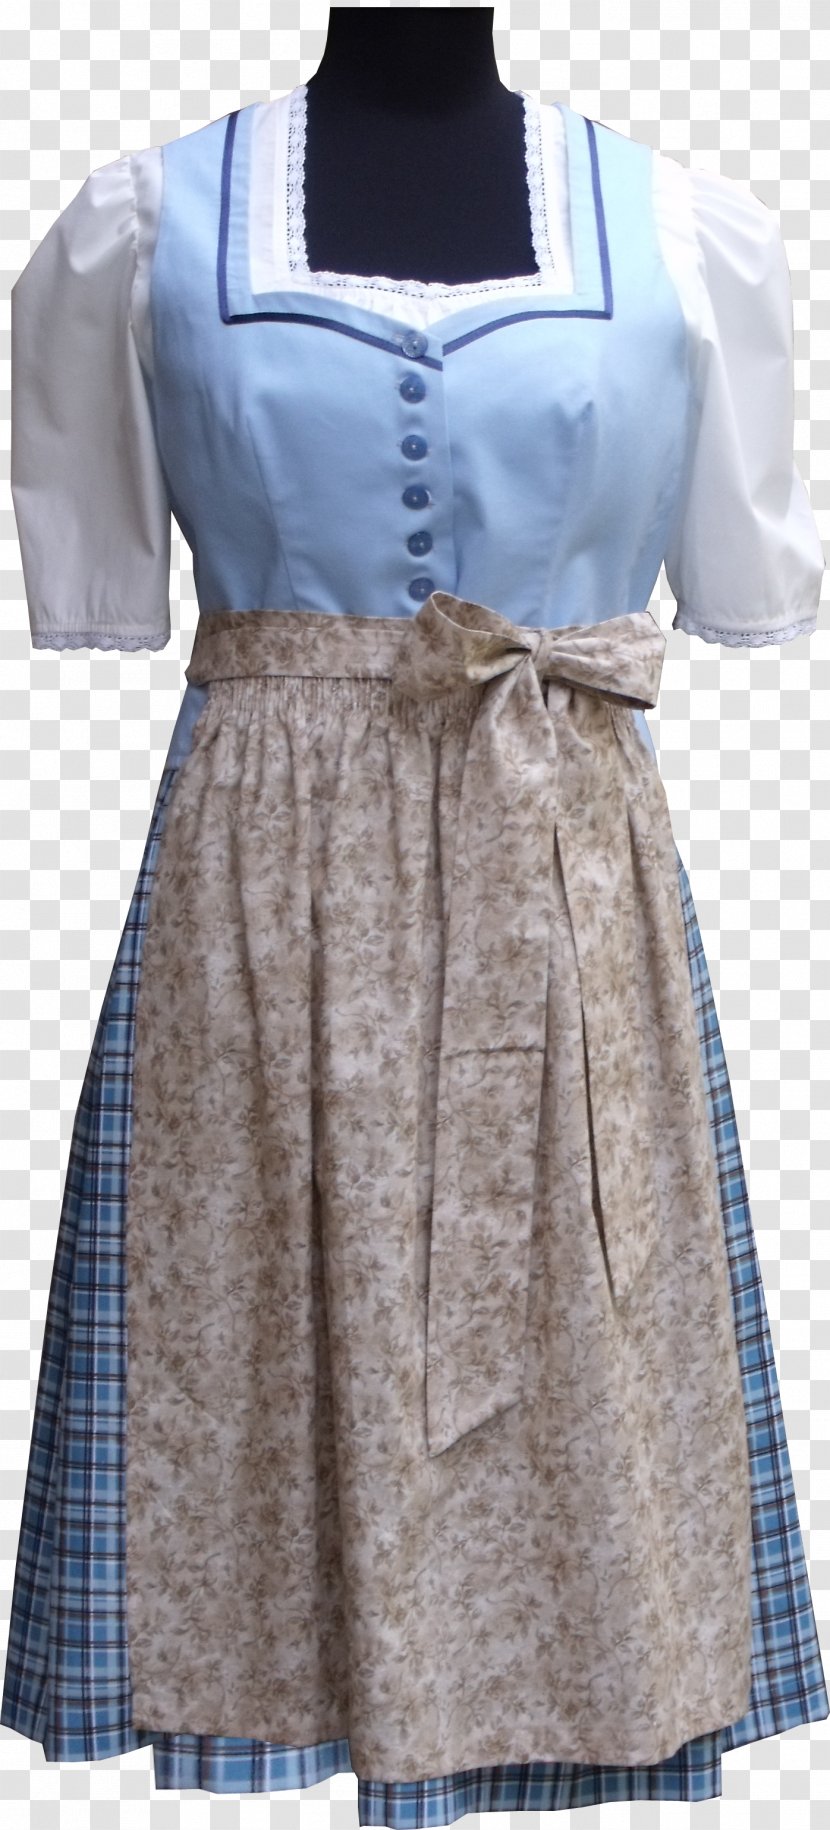 Vintage Clothing Dress Blouse Pattern Transparent PNG